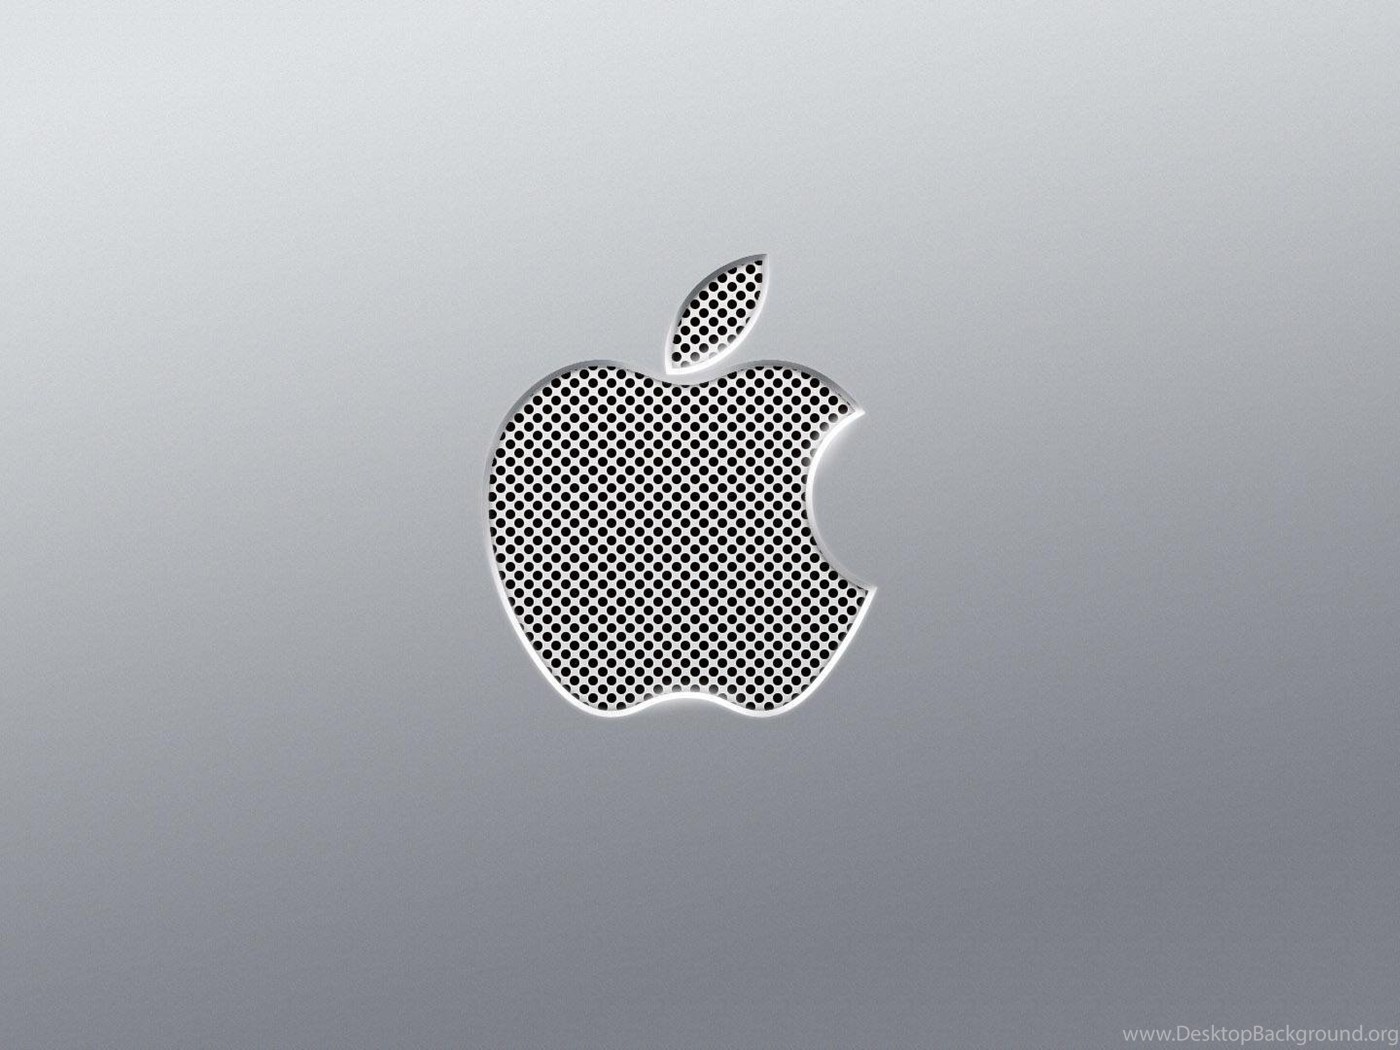 Apple алюминий цвета. Алюминий Apple. Эпл и точка. Новинки от эпл заставки. АПЛ ультра.